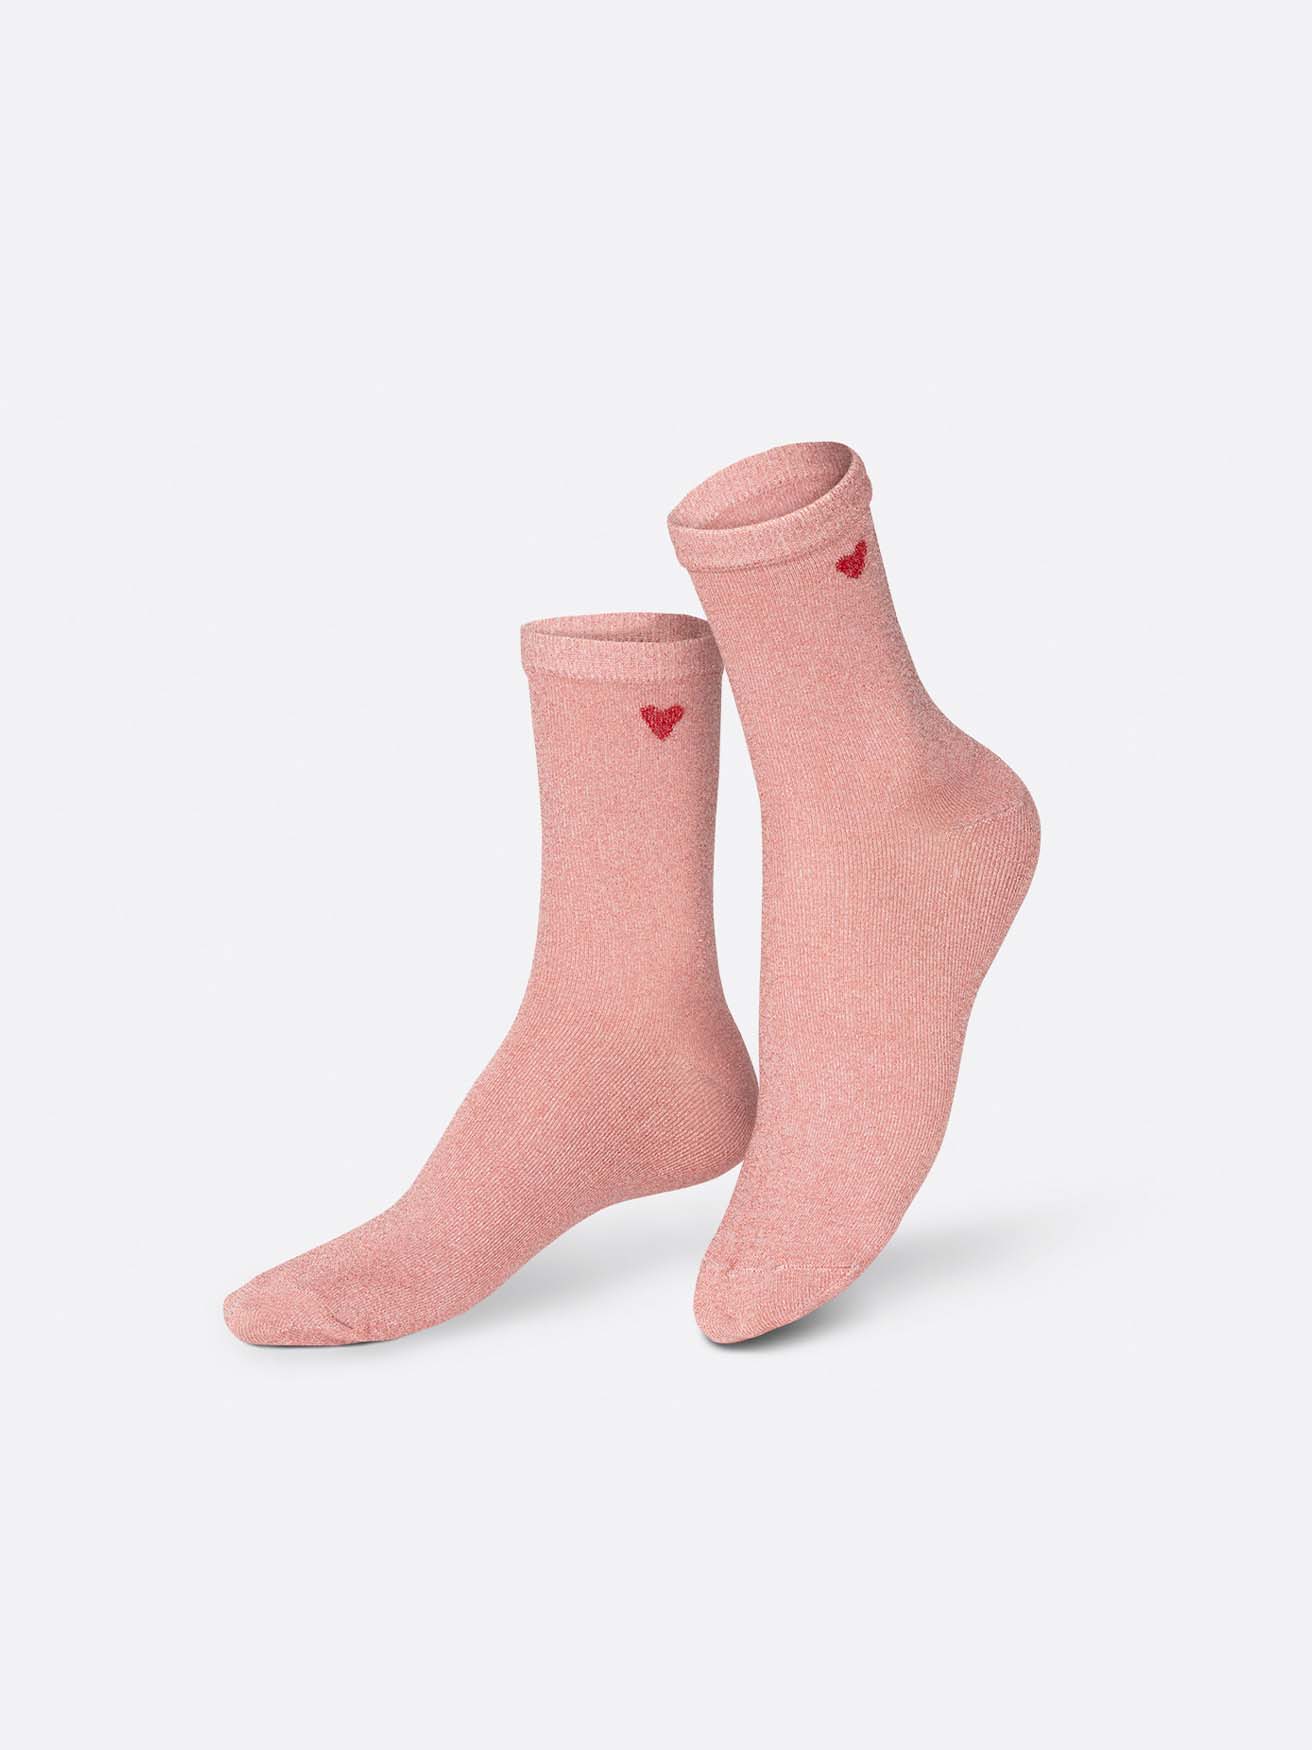 Eat My Socks . Love Me Pink